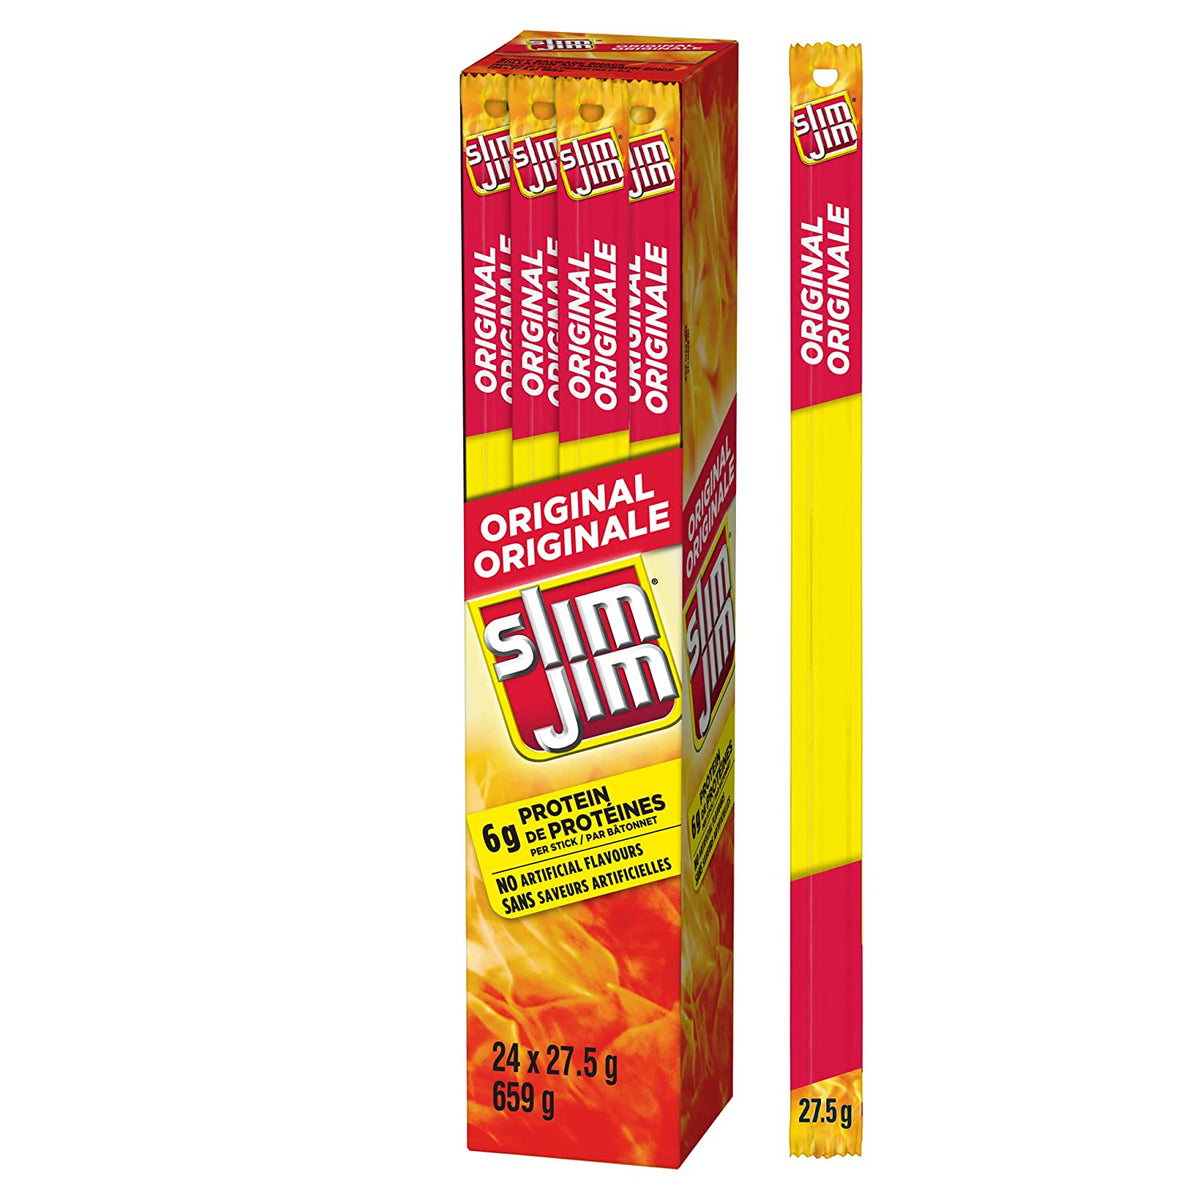 Slim Jim Giant Smoked Meat Sticks, 24 Count Box, Original Flavor, .97 oz Sticks